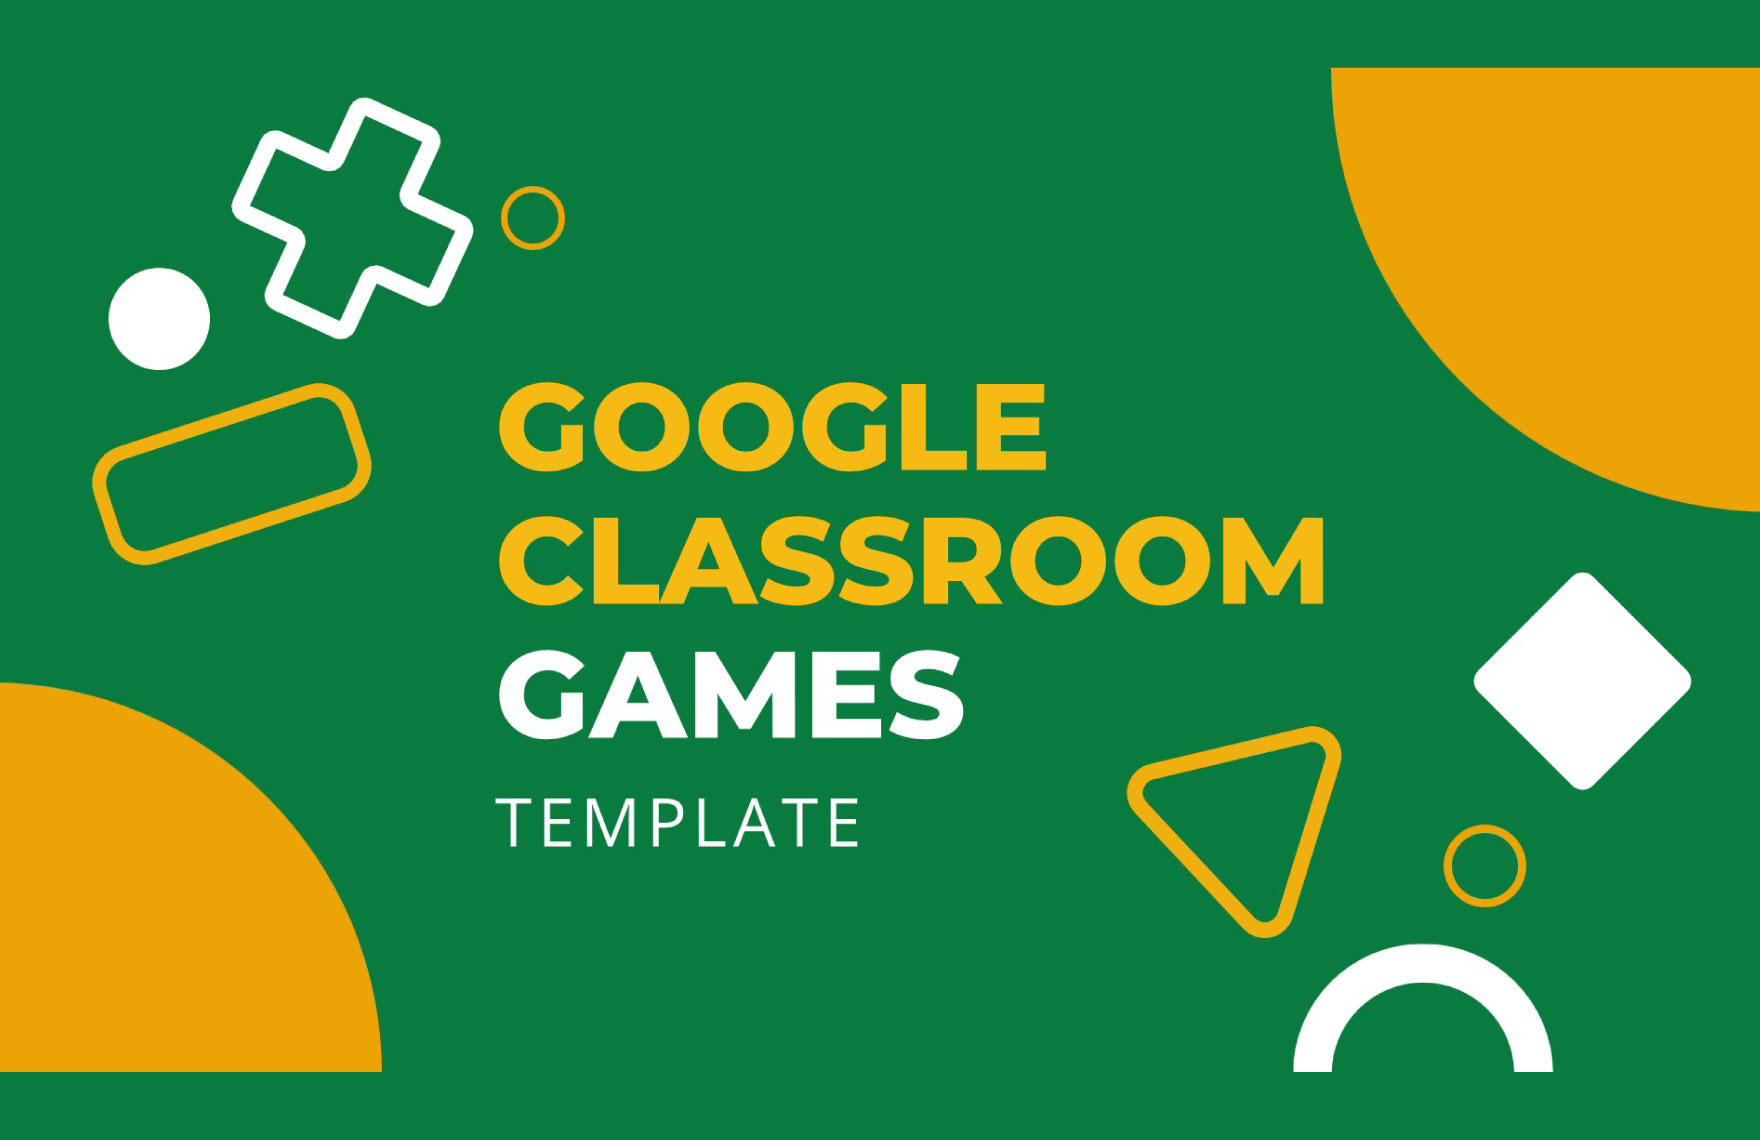 Google Classroom Games Template